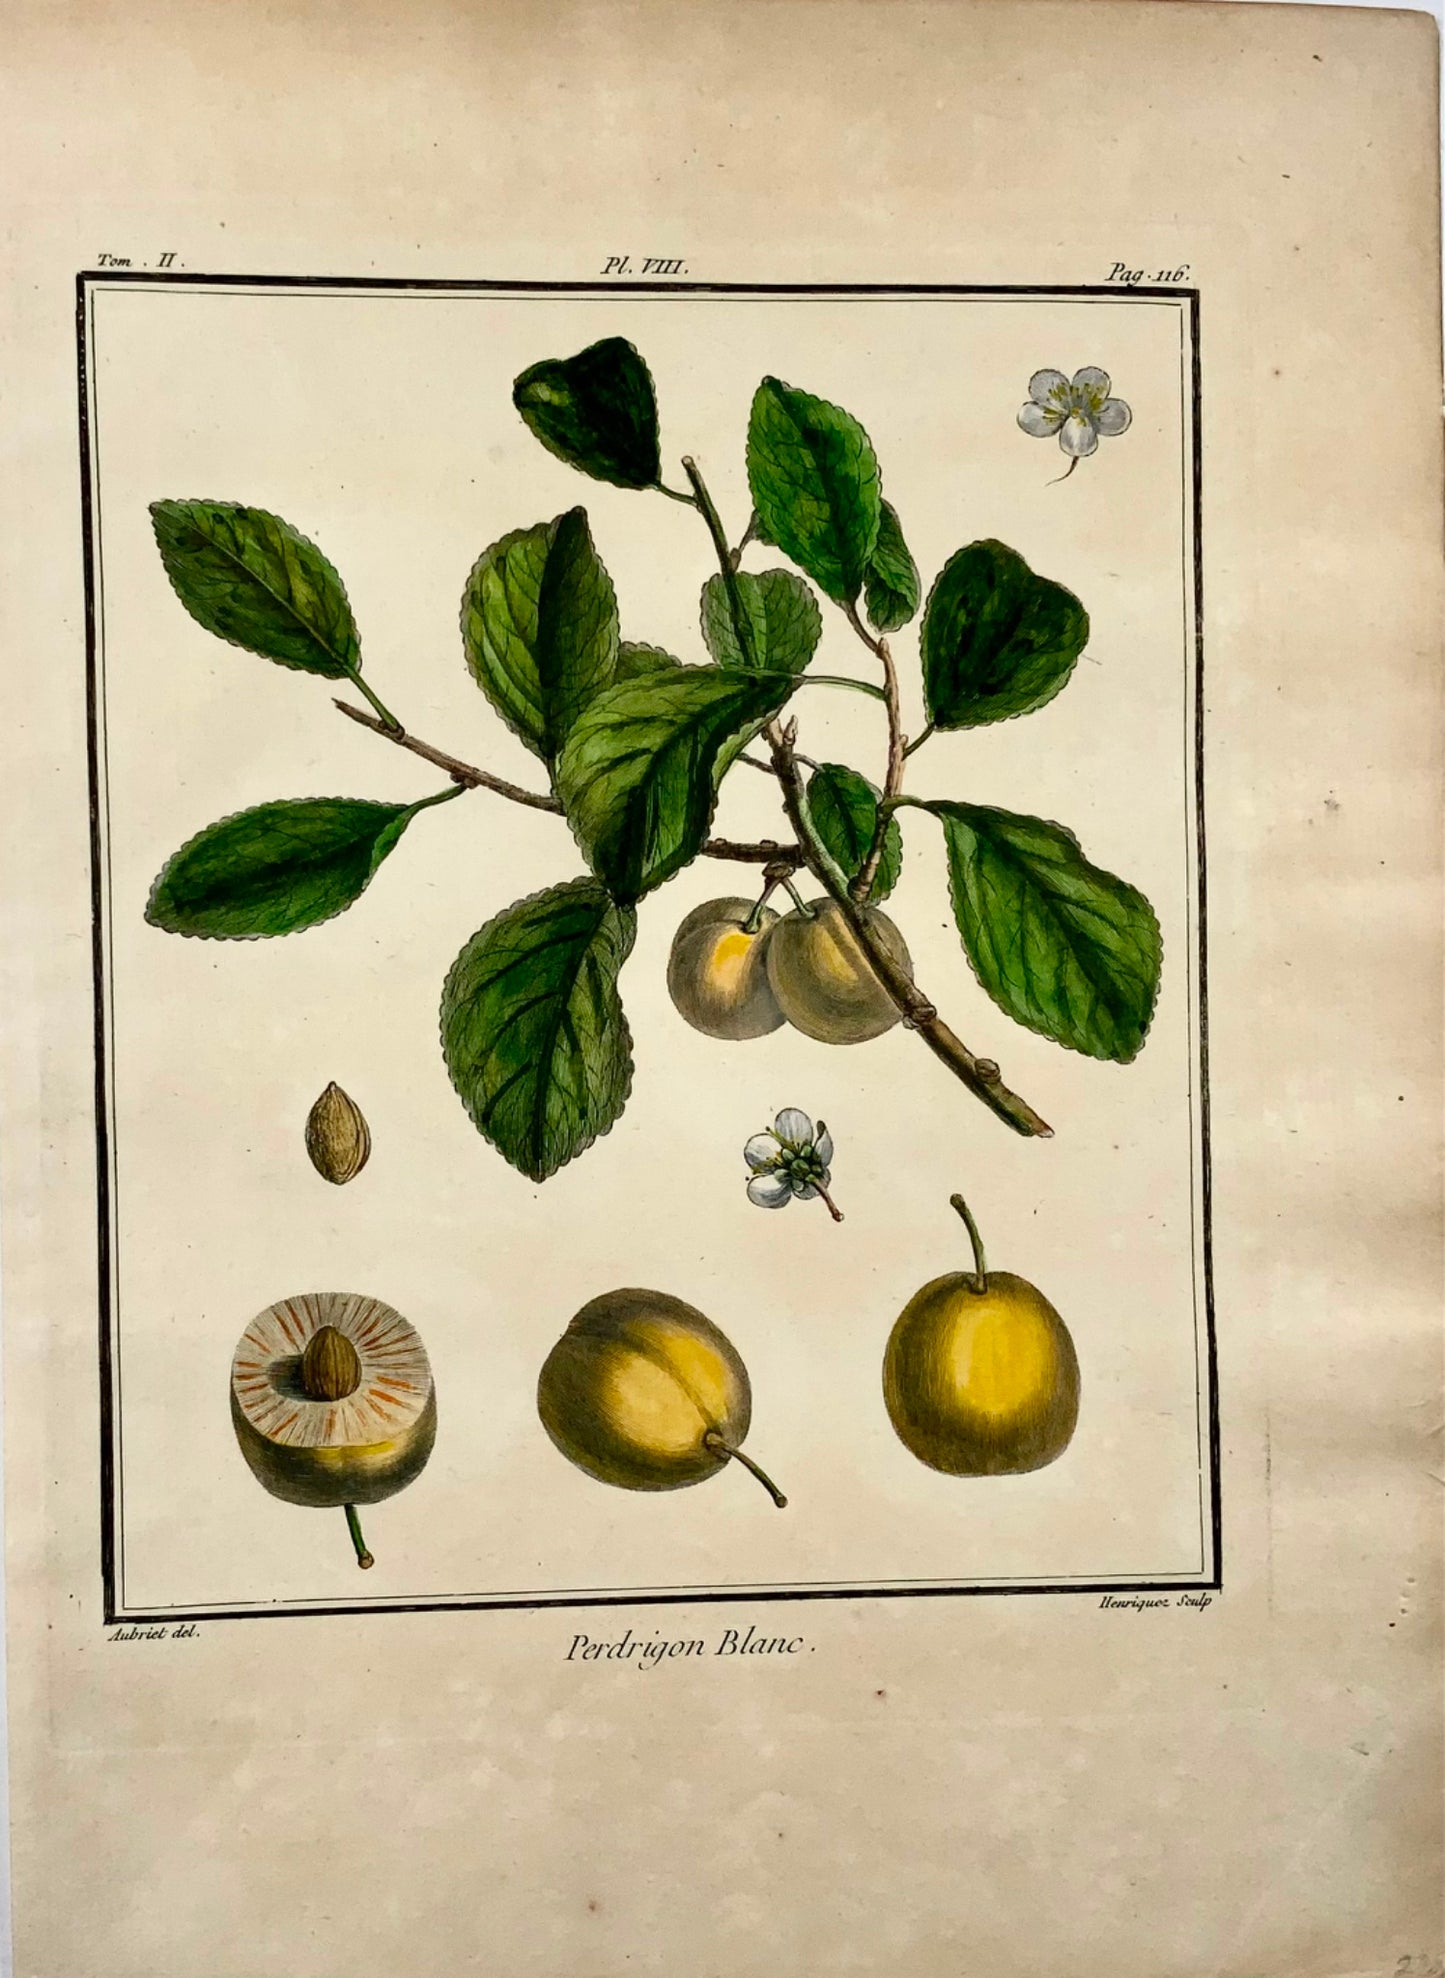 1768 Prugna, frutta, Duhamel du Monceau, quarto grande, colore a mano, 